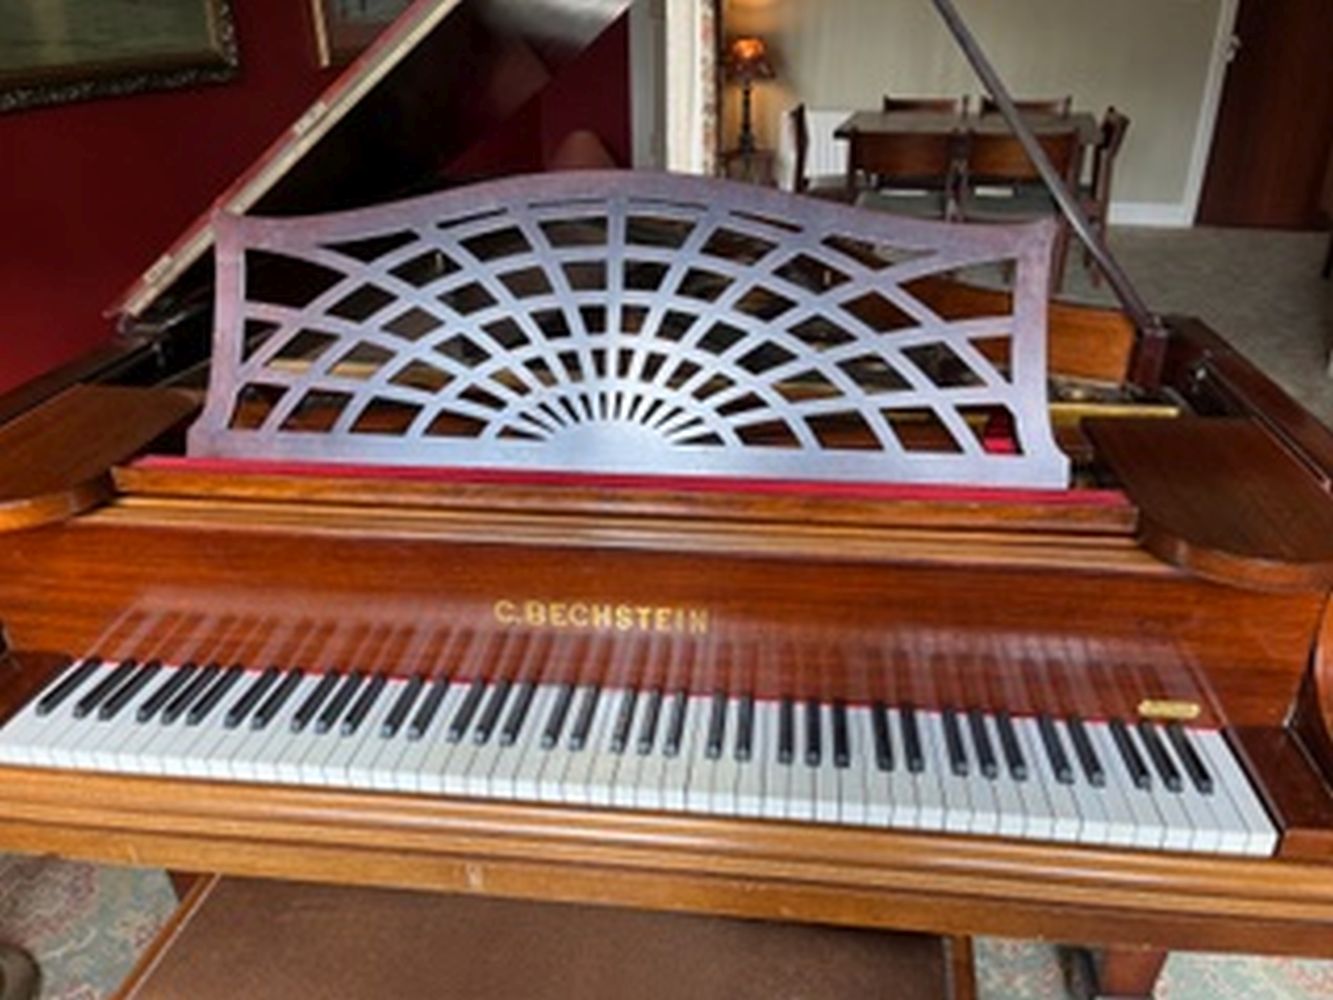 BECHSTEIN GRAND PIANO - Image 3 of 4